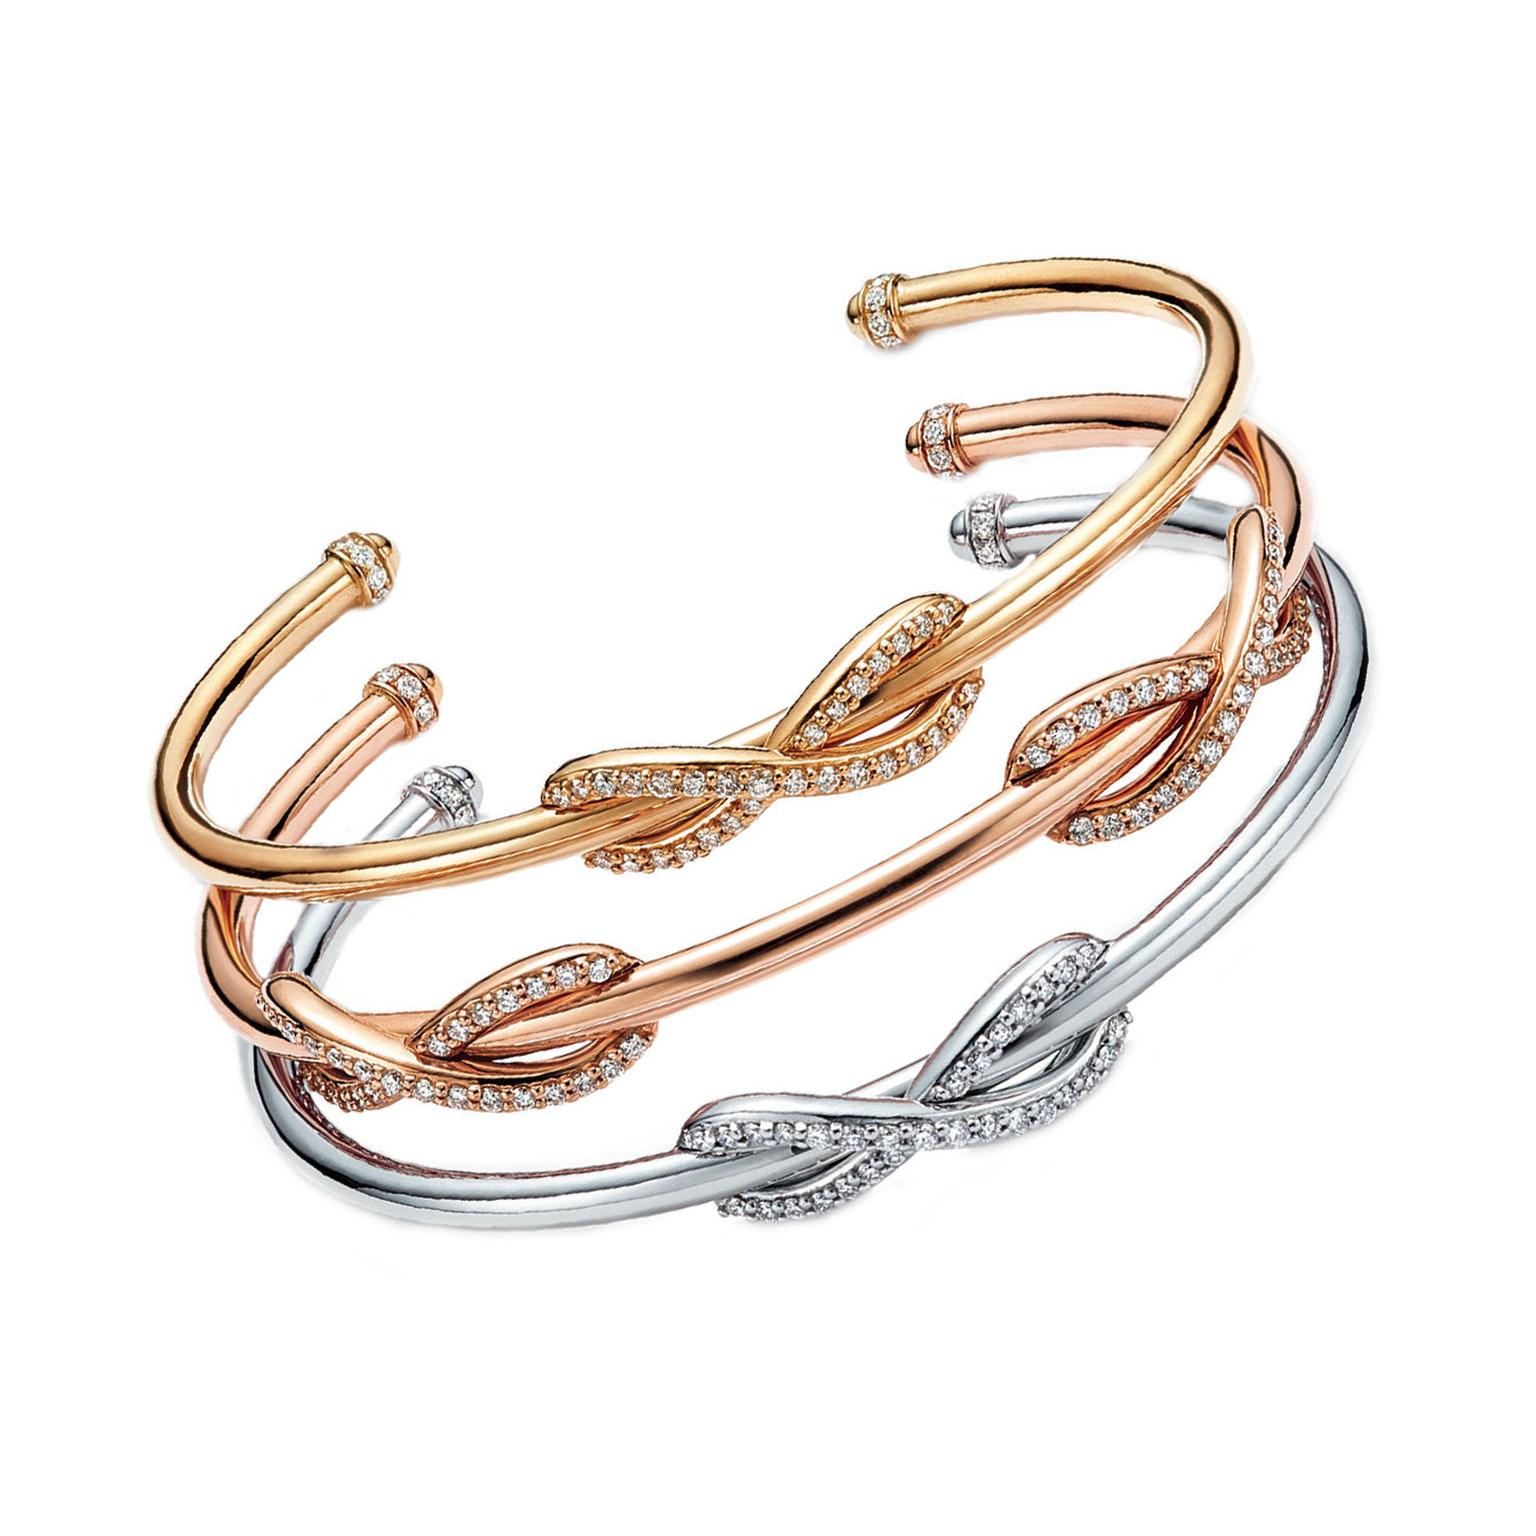 Tiffany Infinity stacking bracelets